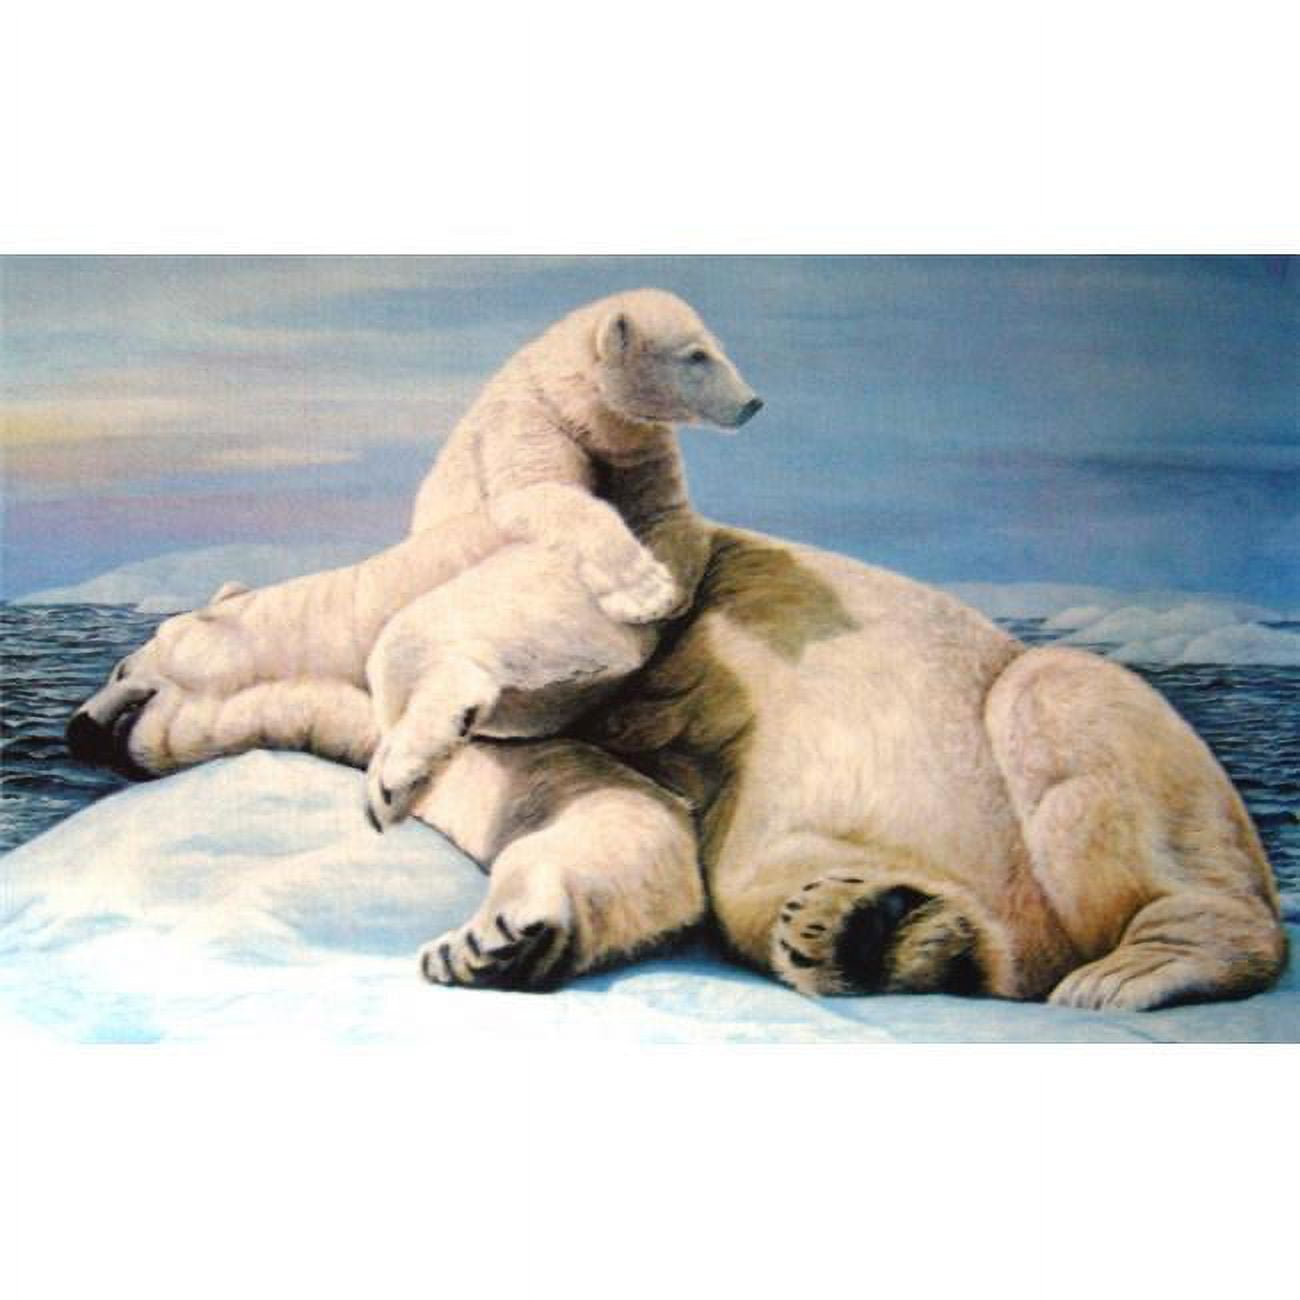 Awv075 Polar Bears Doormat Rug, Silver - 18 X 30 In.